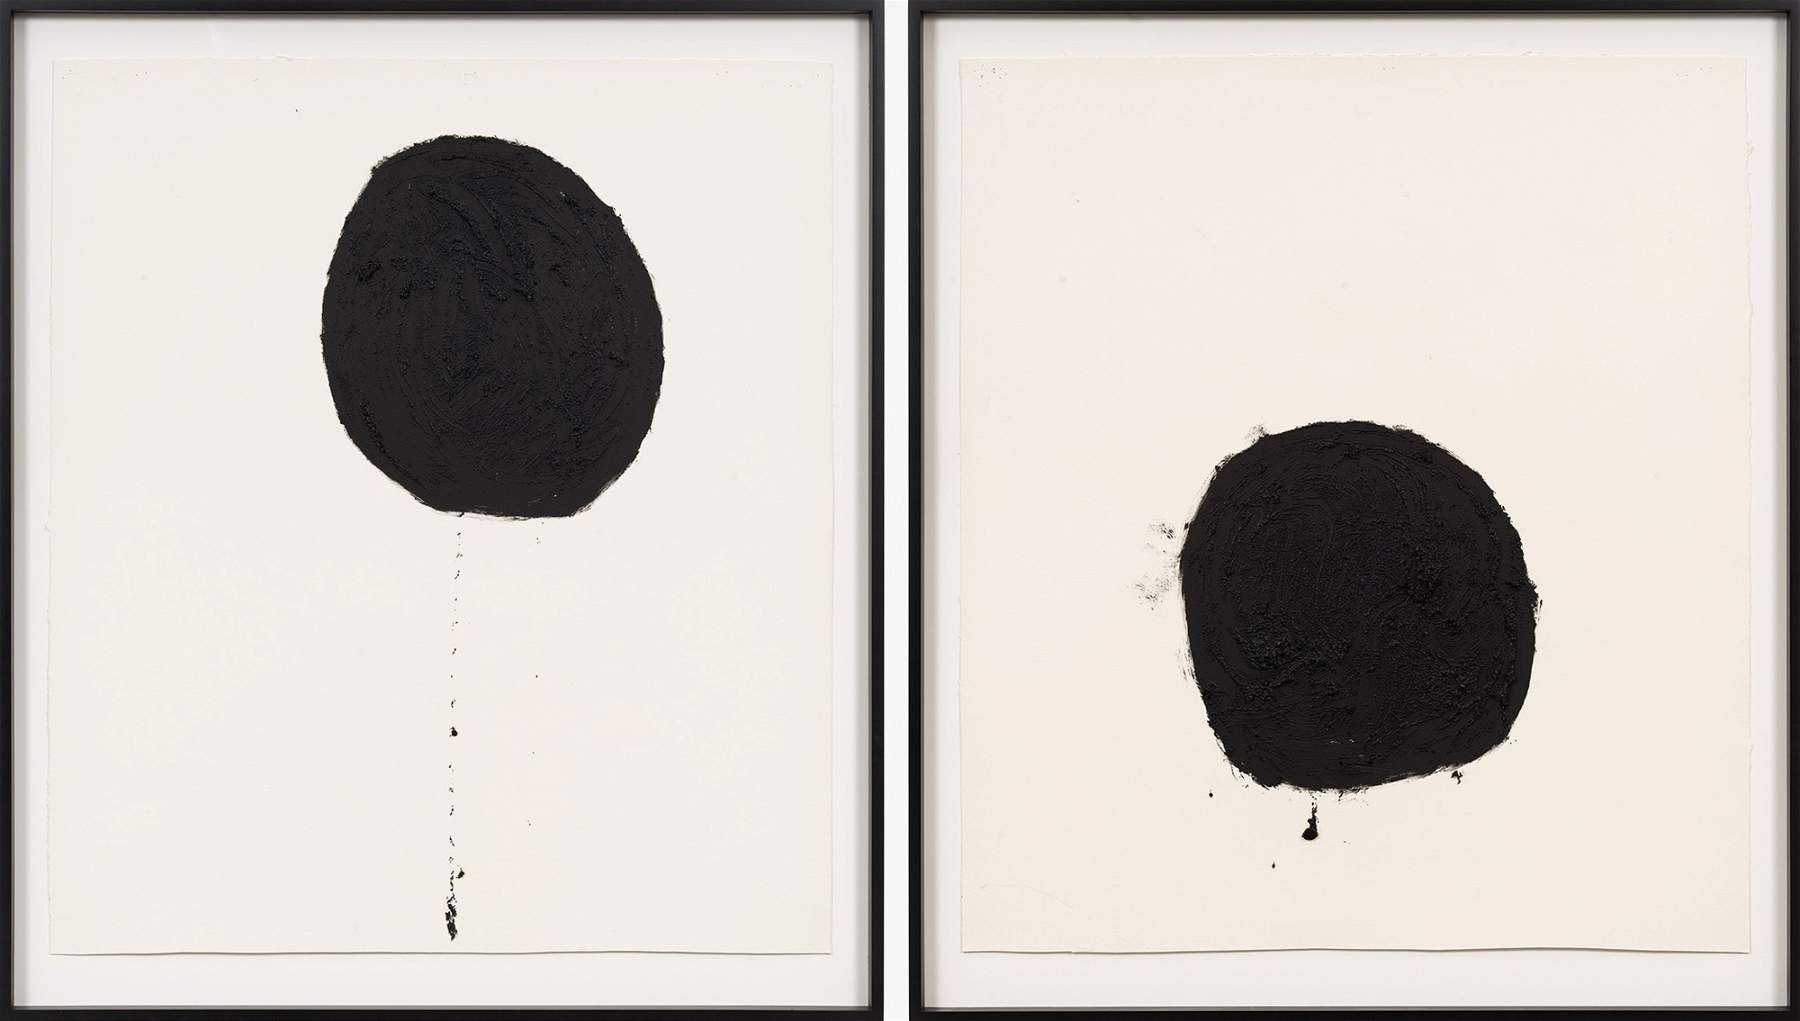 Milan, 40 works by Richard Serra on display at Cardi Gallery